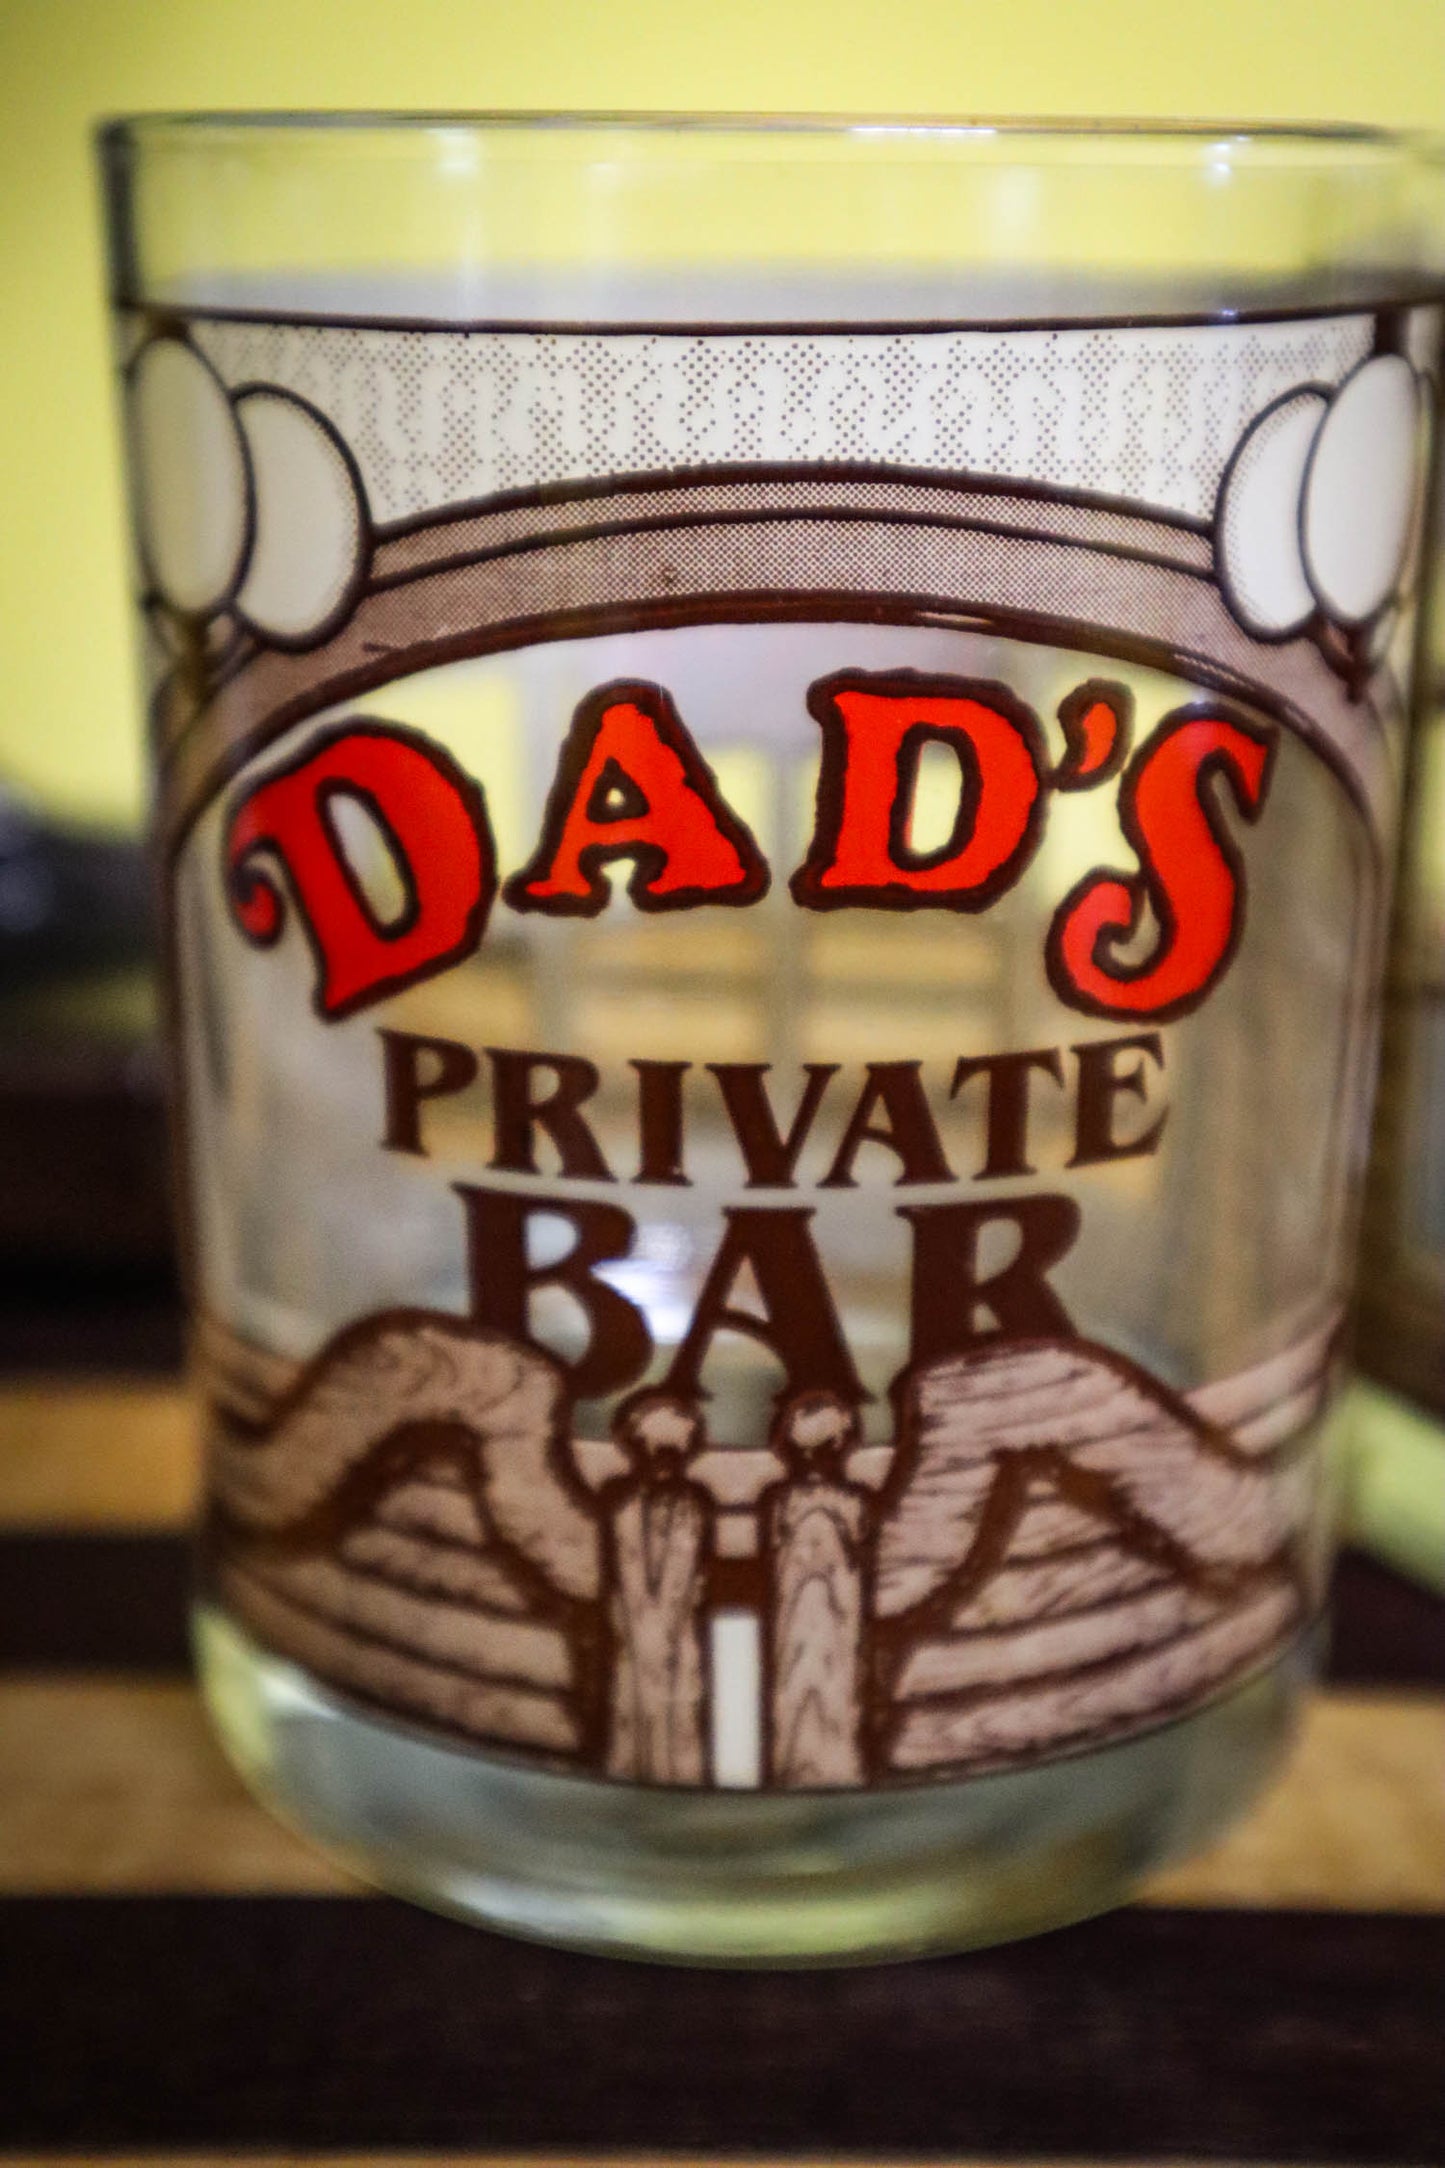 Dad's Private Bar Glasses